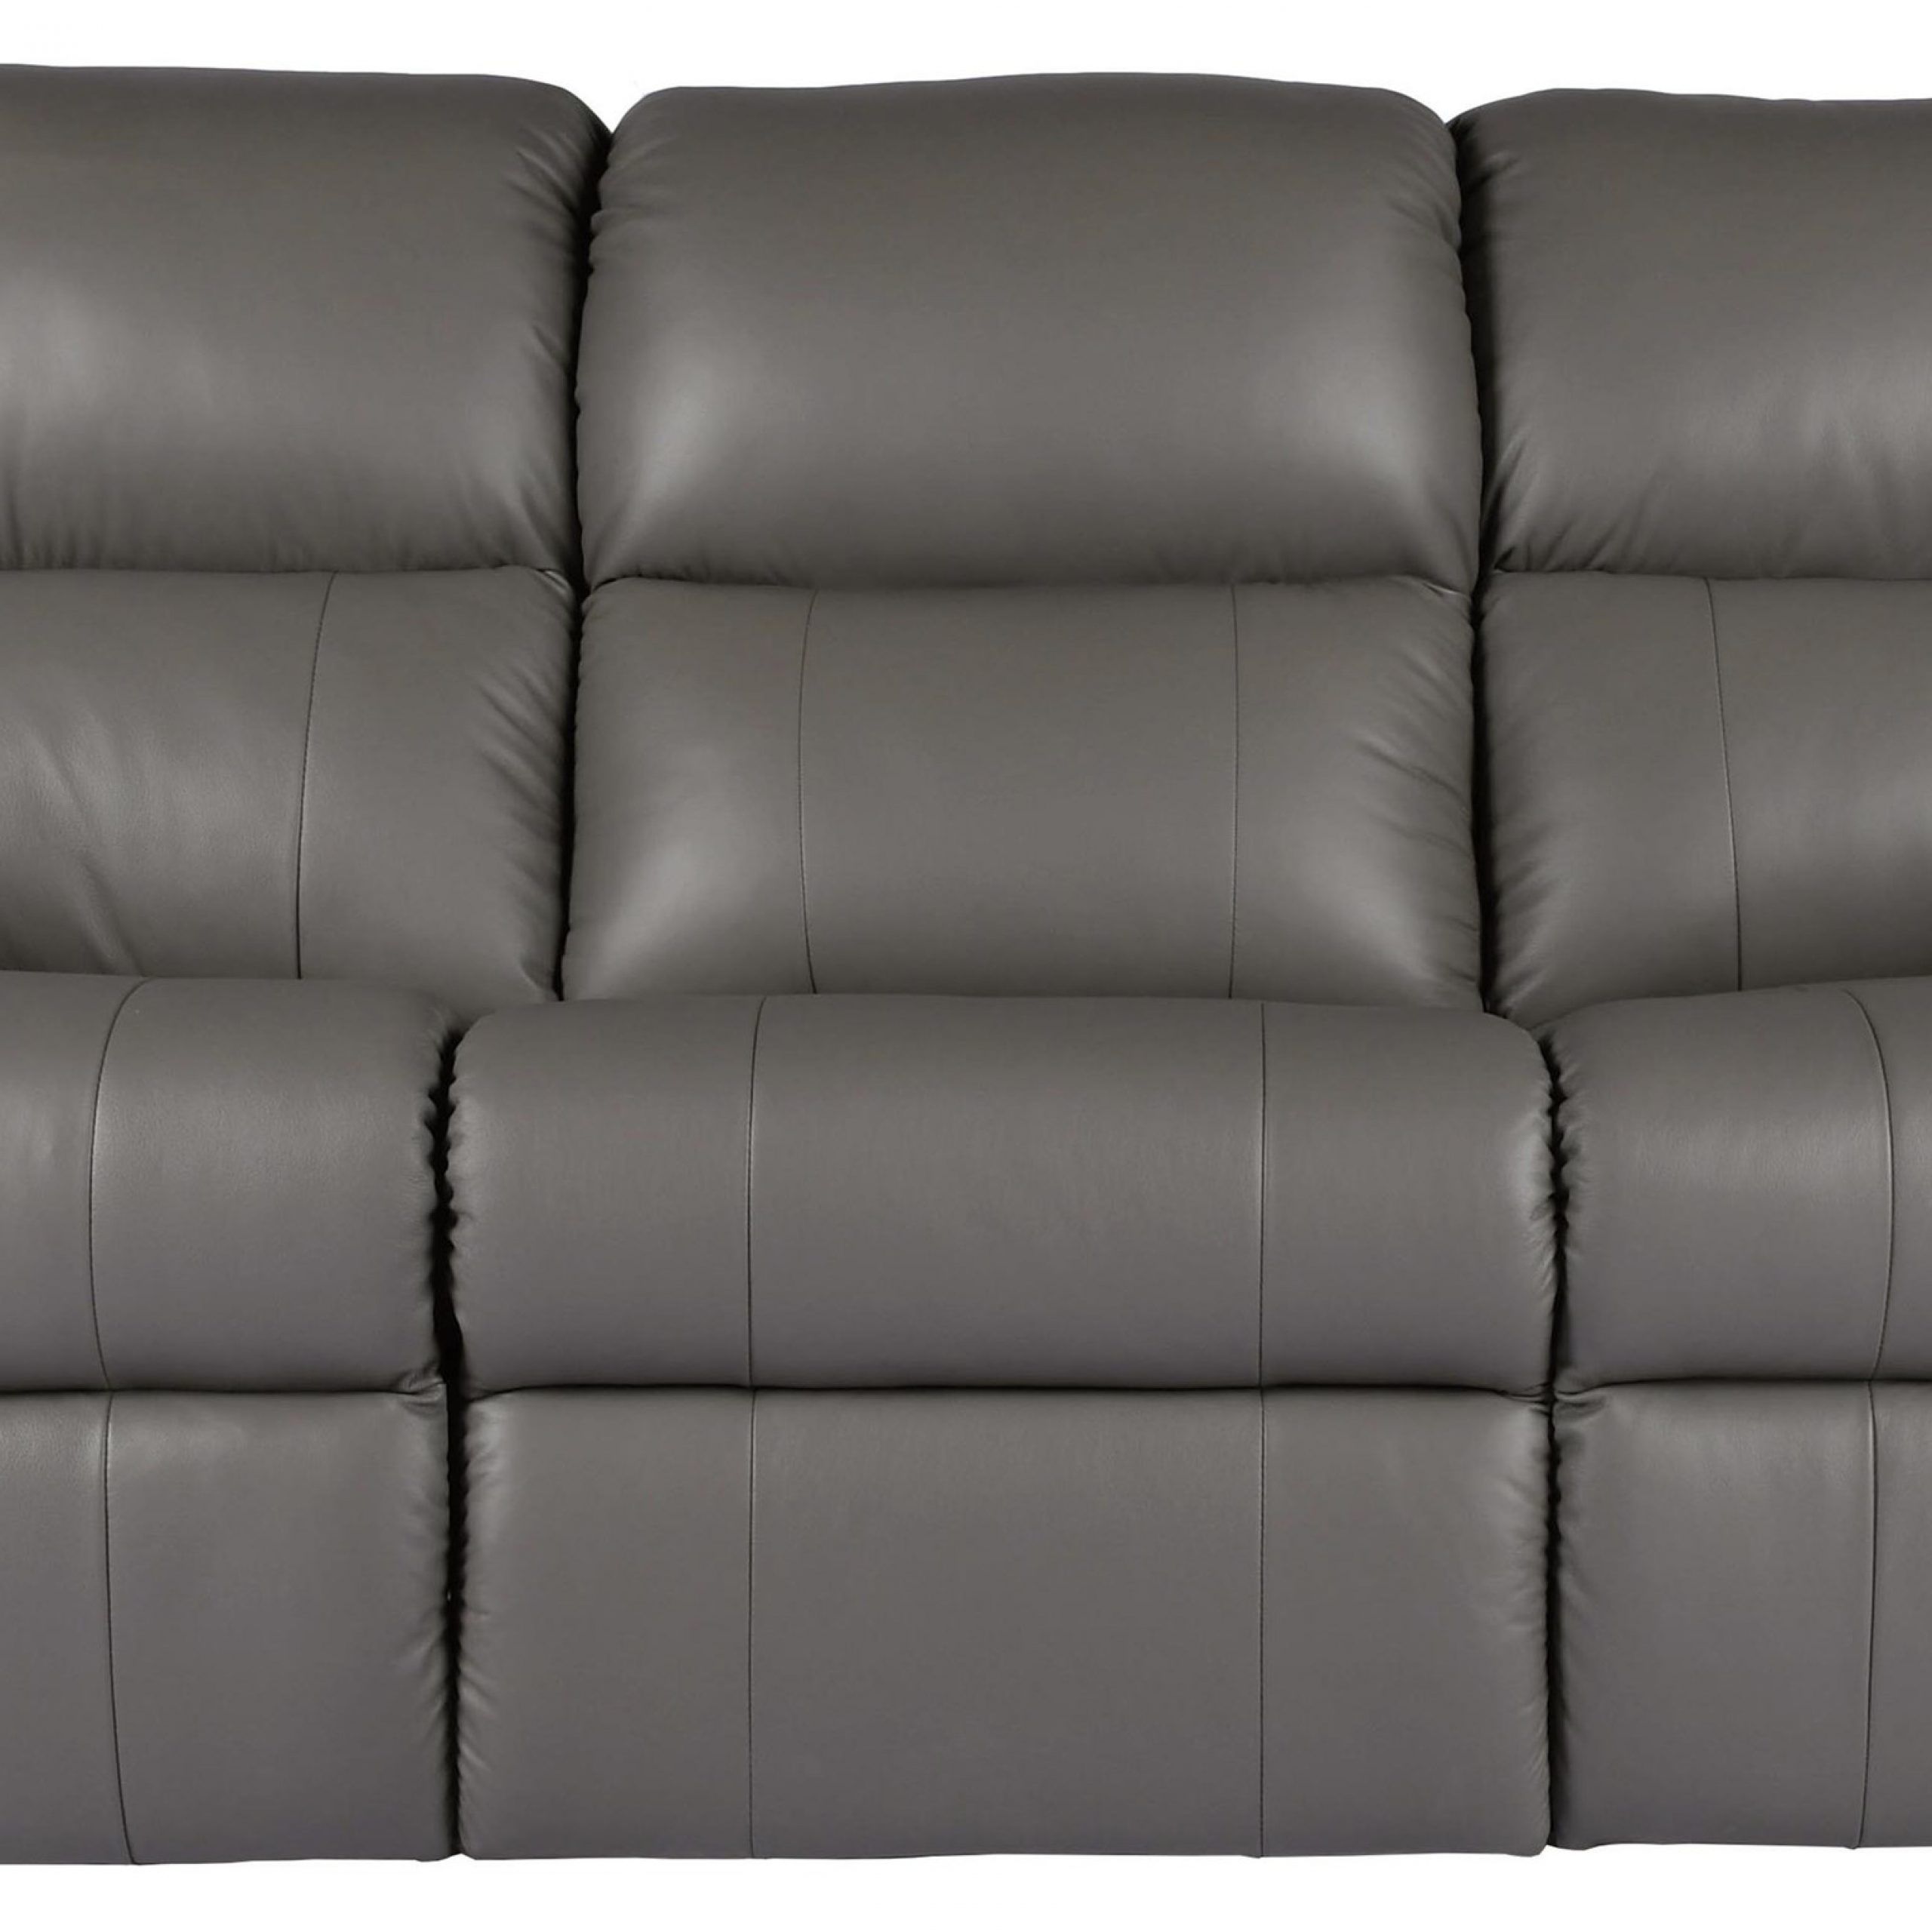 Rockwood Burleigh Power Reclining Sofa With Pillow Arms With Bennett Power Reclining Sofas (View 15 of 15)